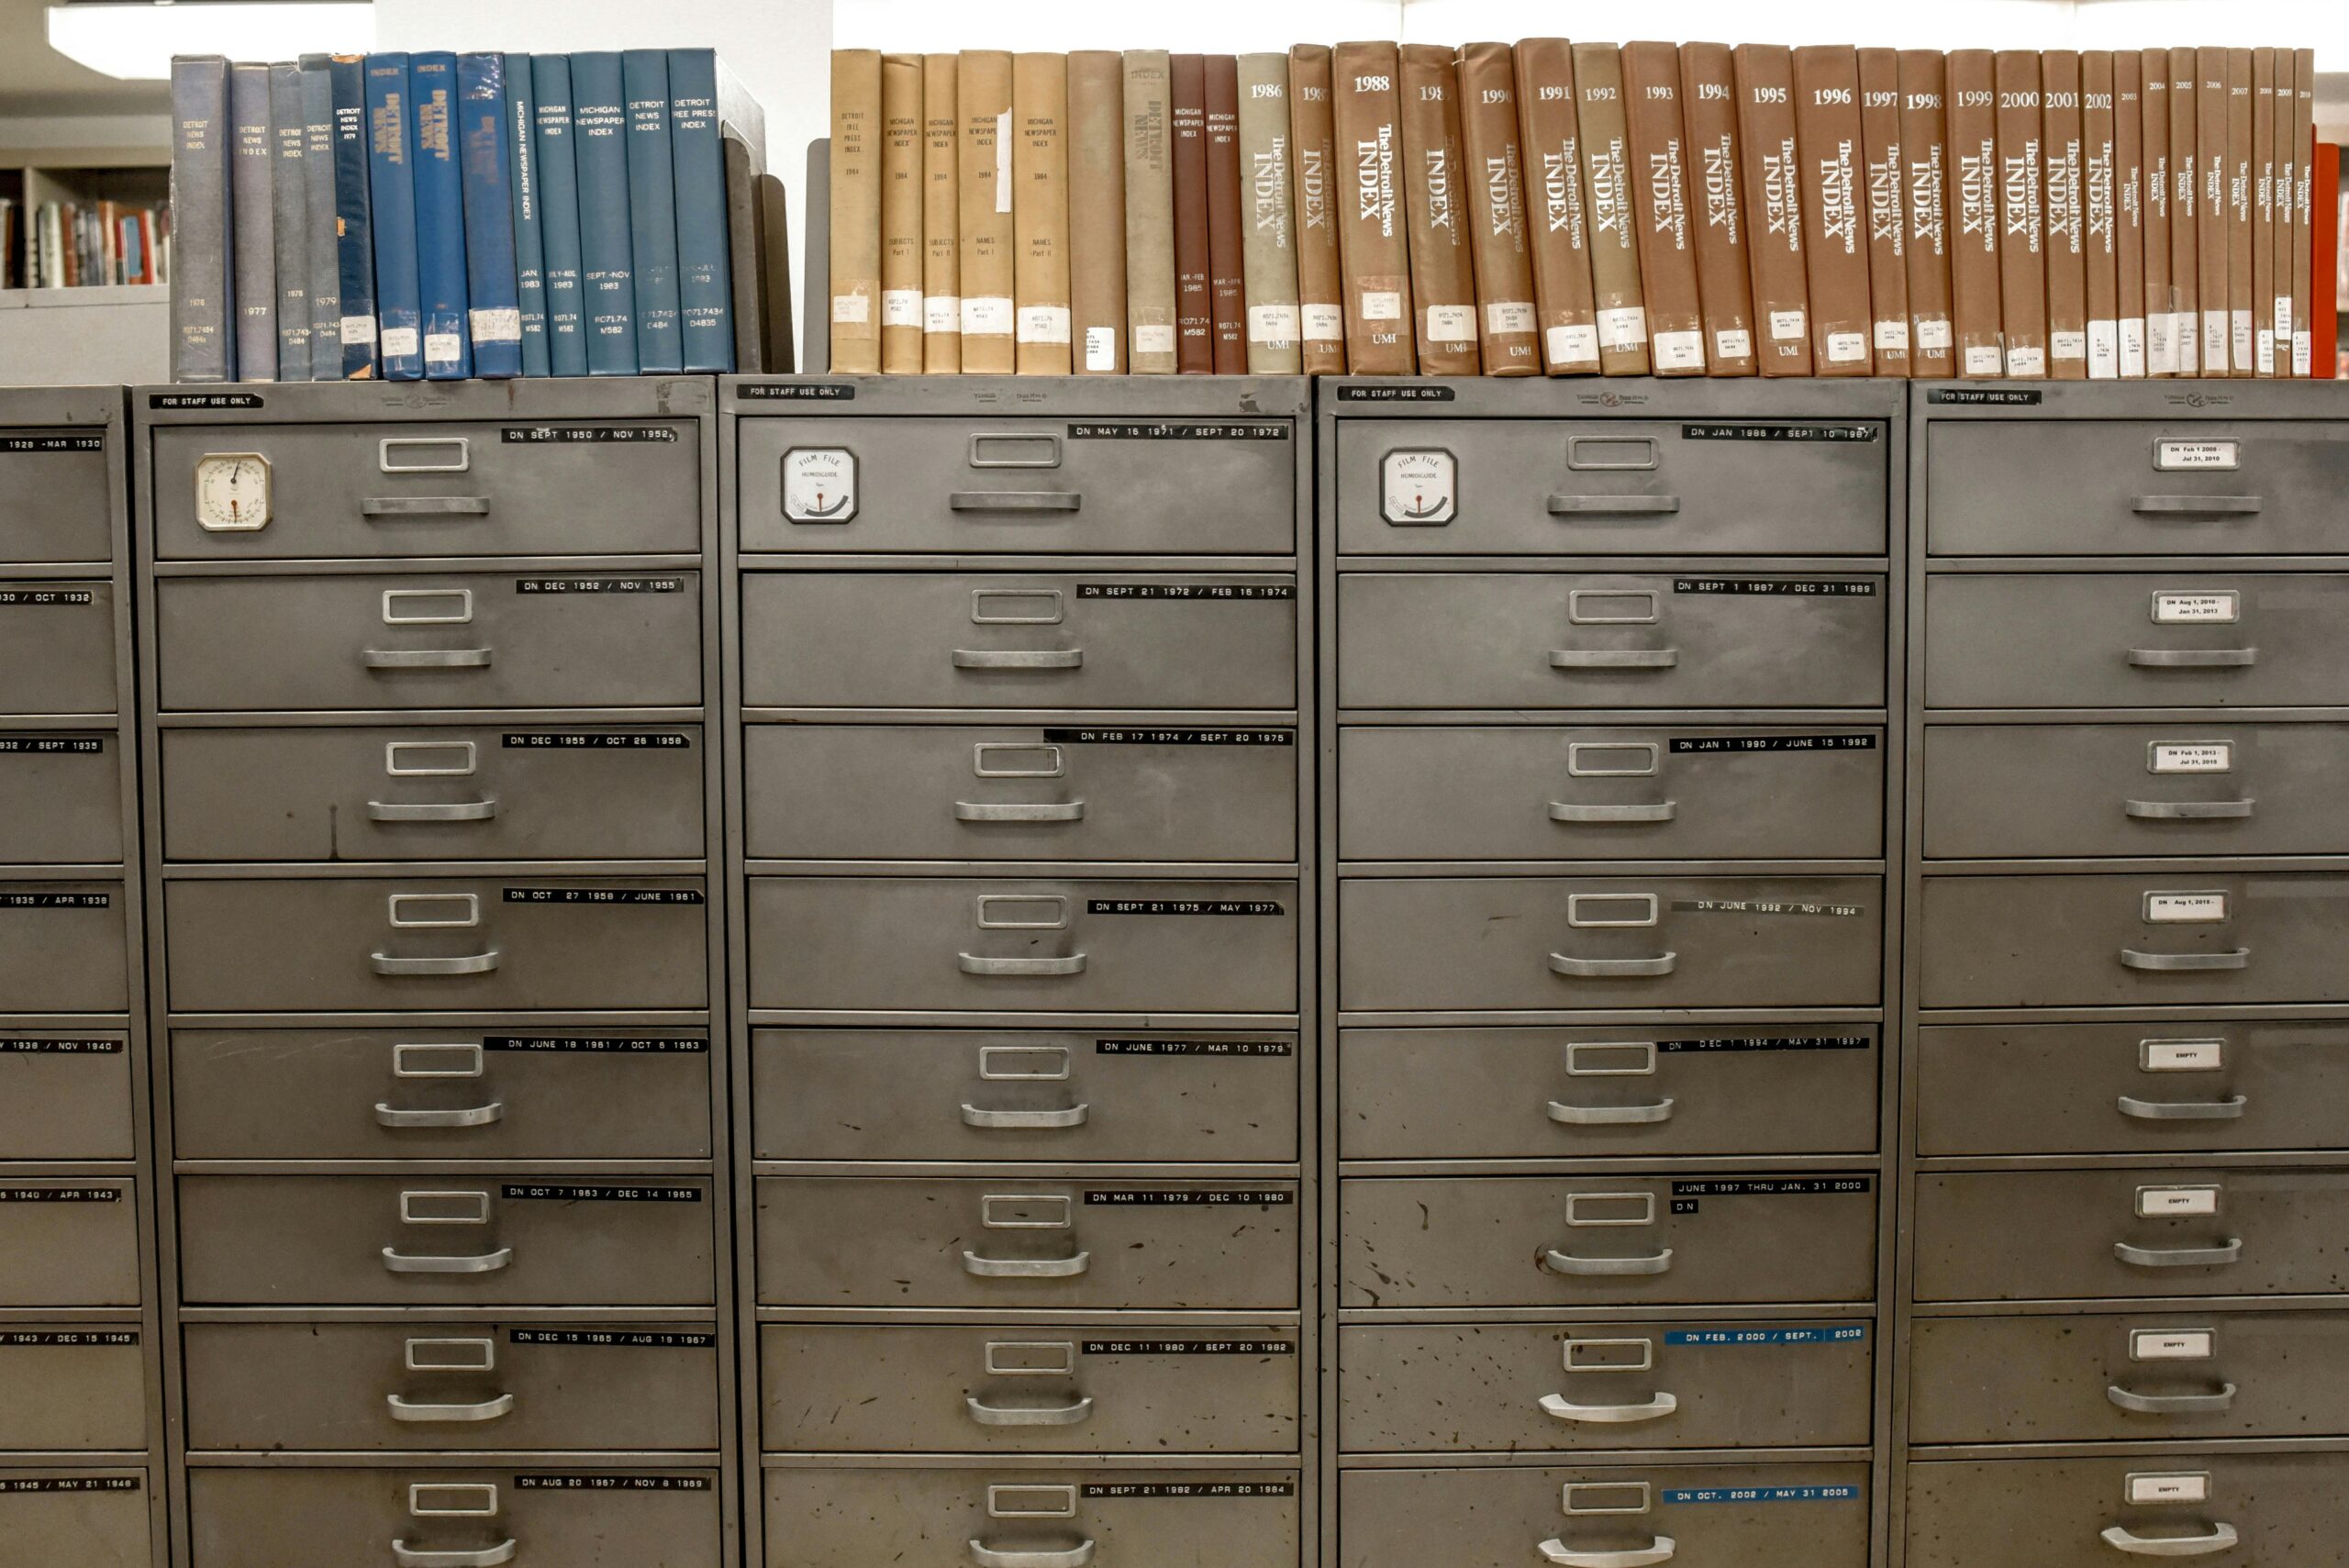 Gestão de documentos: como organizá-los e categorizá-los